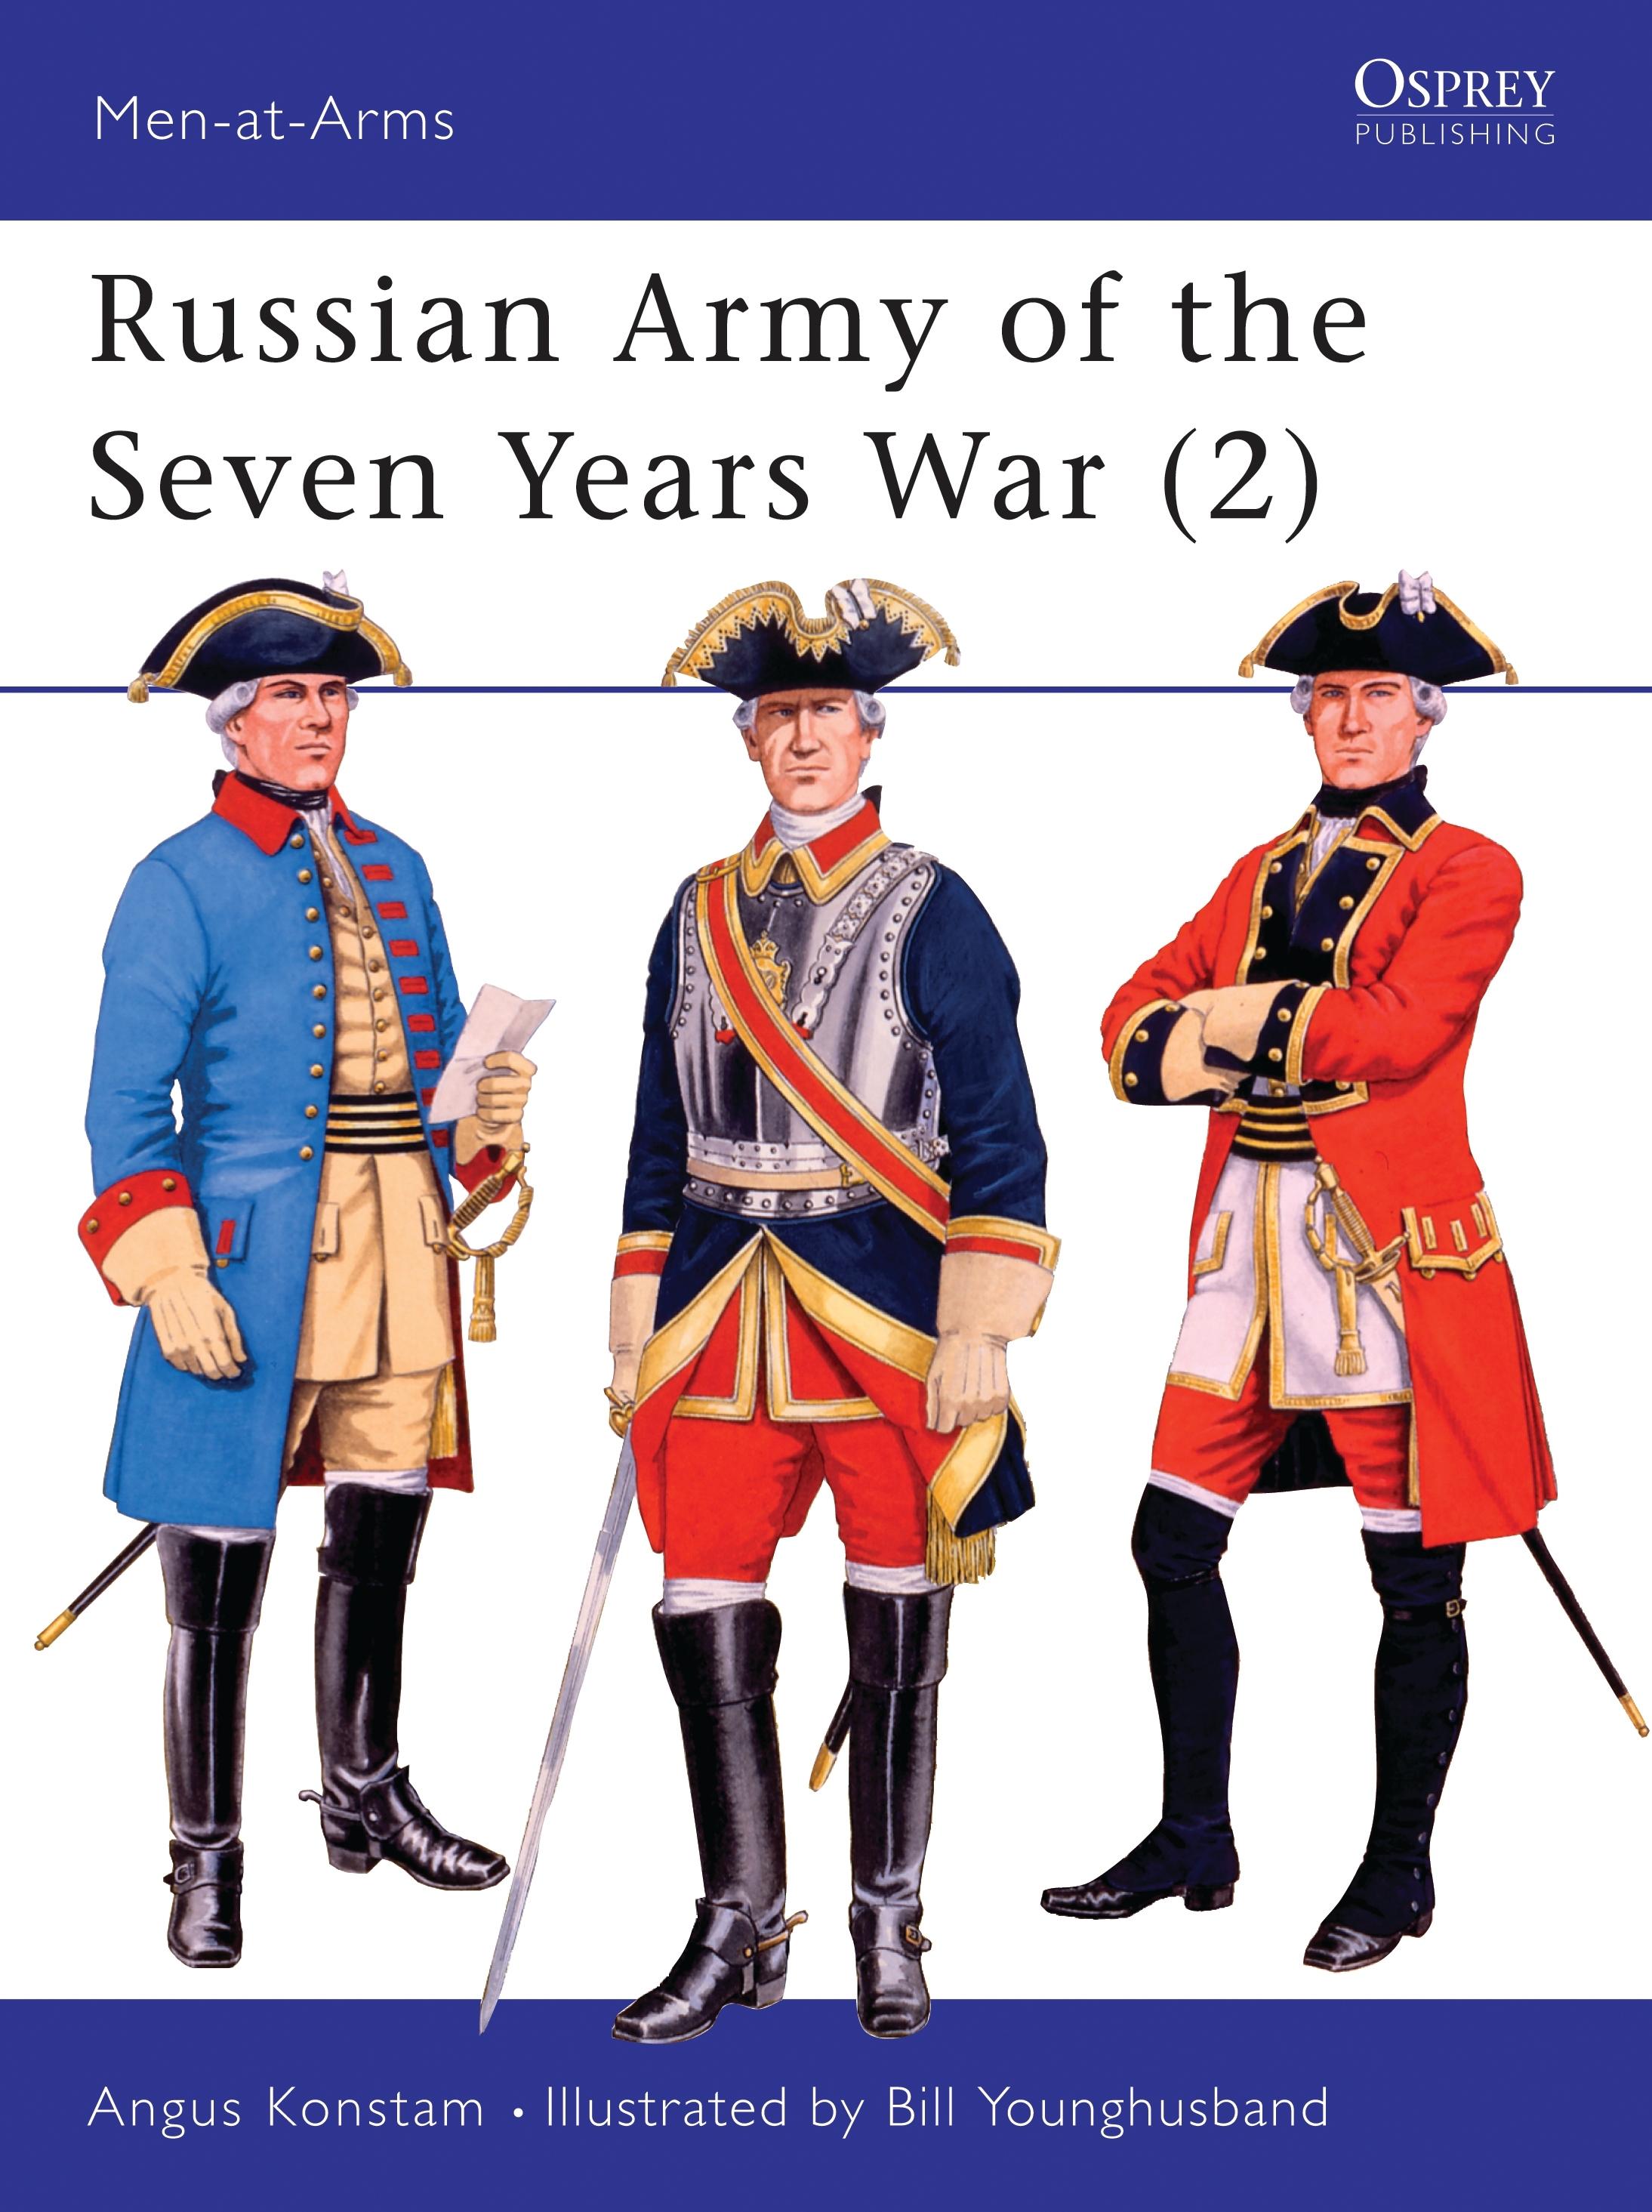 Russian Army of the Seven Years War (2) / Angus Konstam / Taschenbuch / Men-At-Arms (Osprey) / Englisch / 1996 / OSPREY PUB INC / EAN 9781855325876 - Konstam, Angus